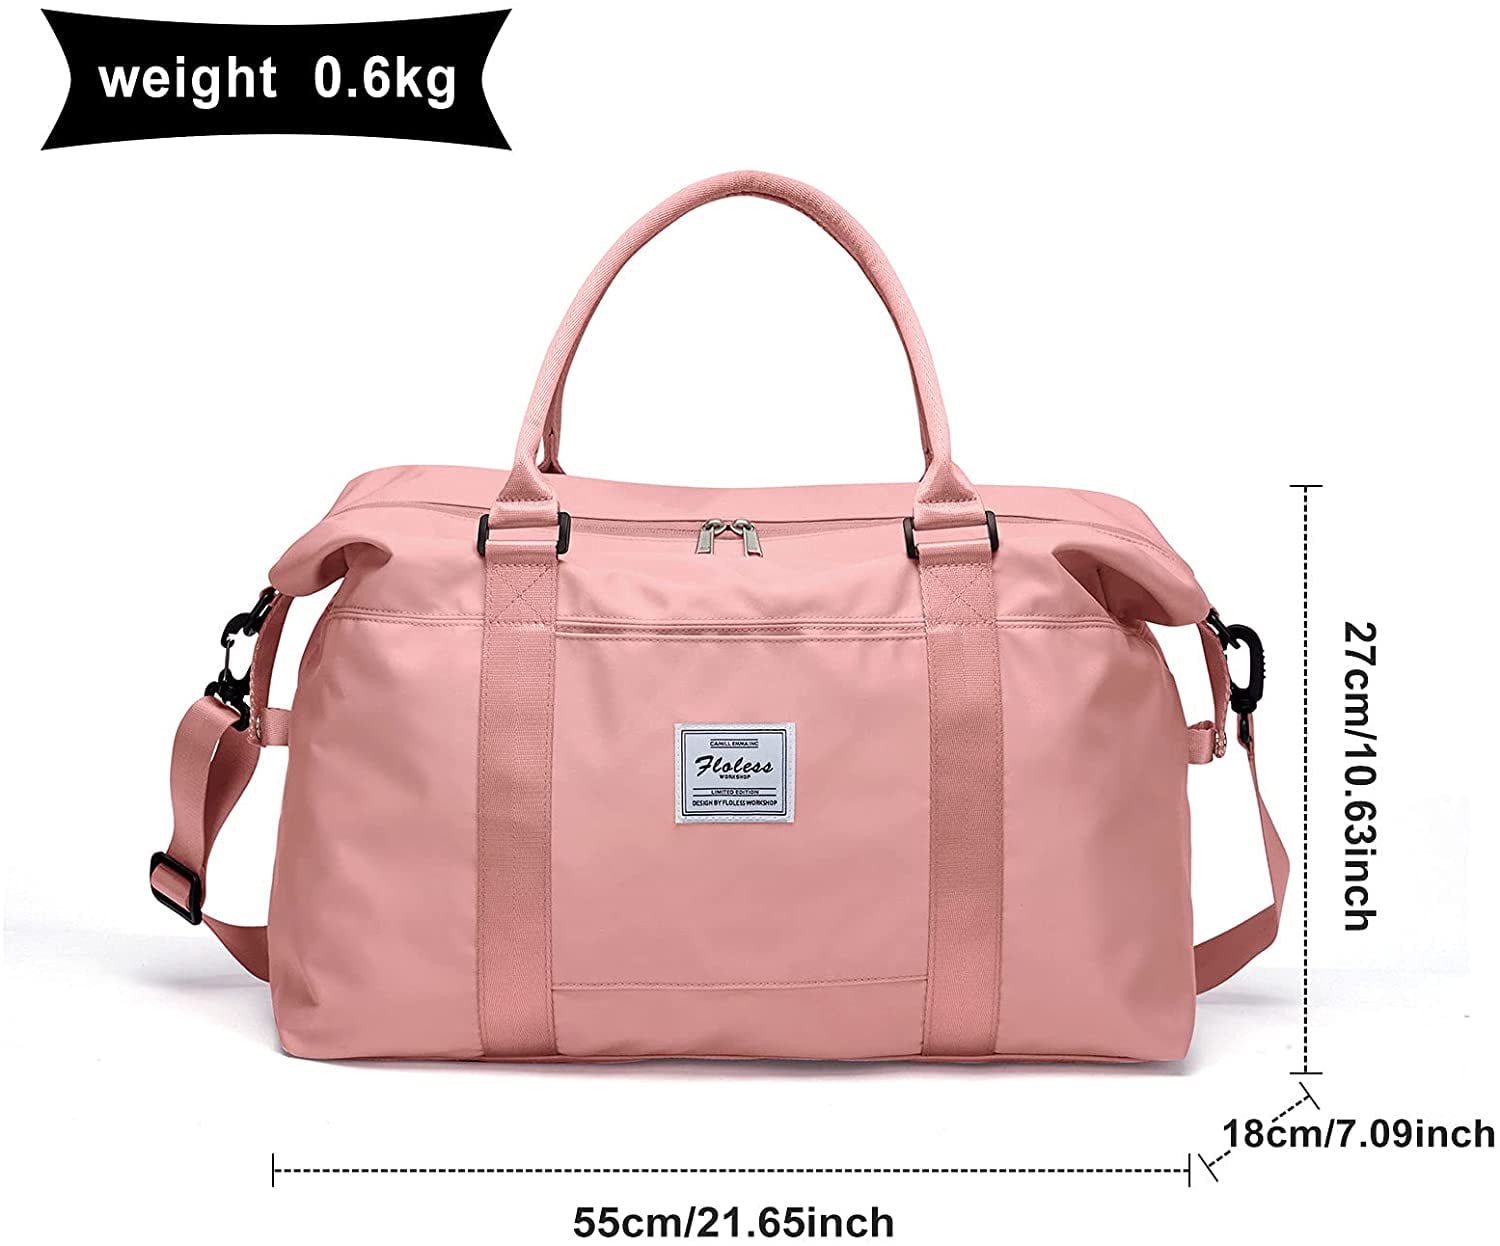 ZICANCN Funny Pandas Pink Unisex Large Duffle Bag for Travel - Sports Tote  Gym Bag Airplane Weekenders Bags for Women Men 